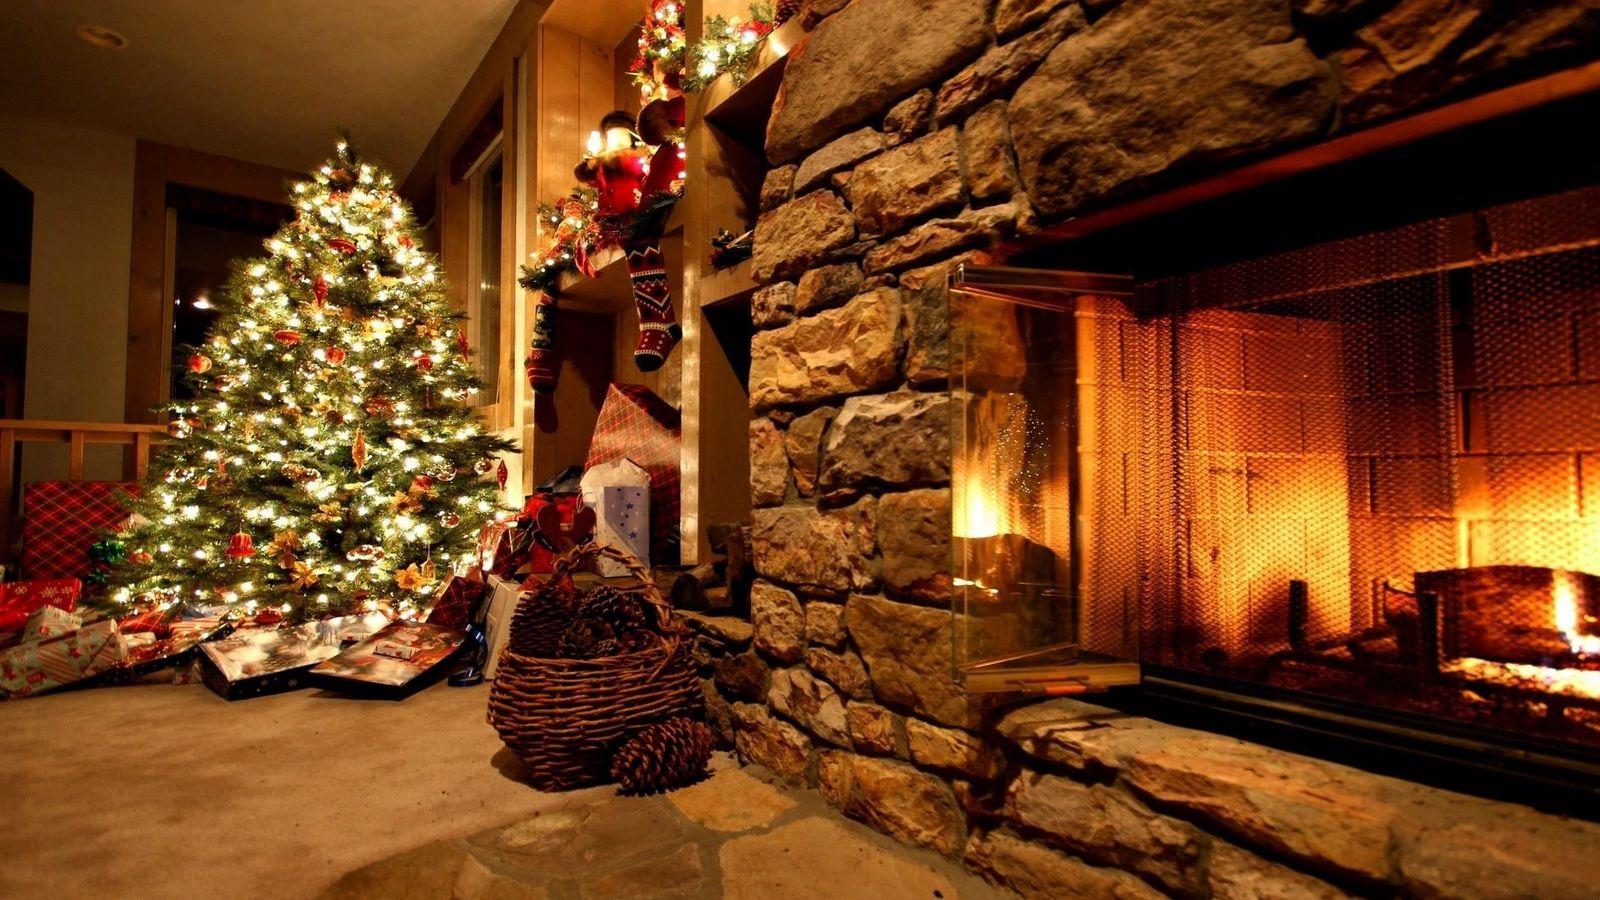 Download wallpaper 1600x900 christmas tree, ornaments